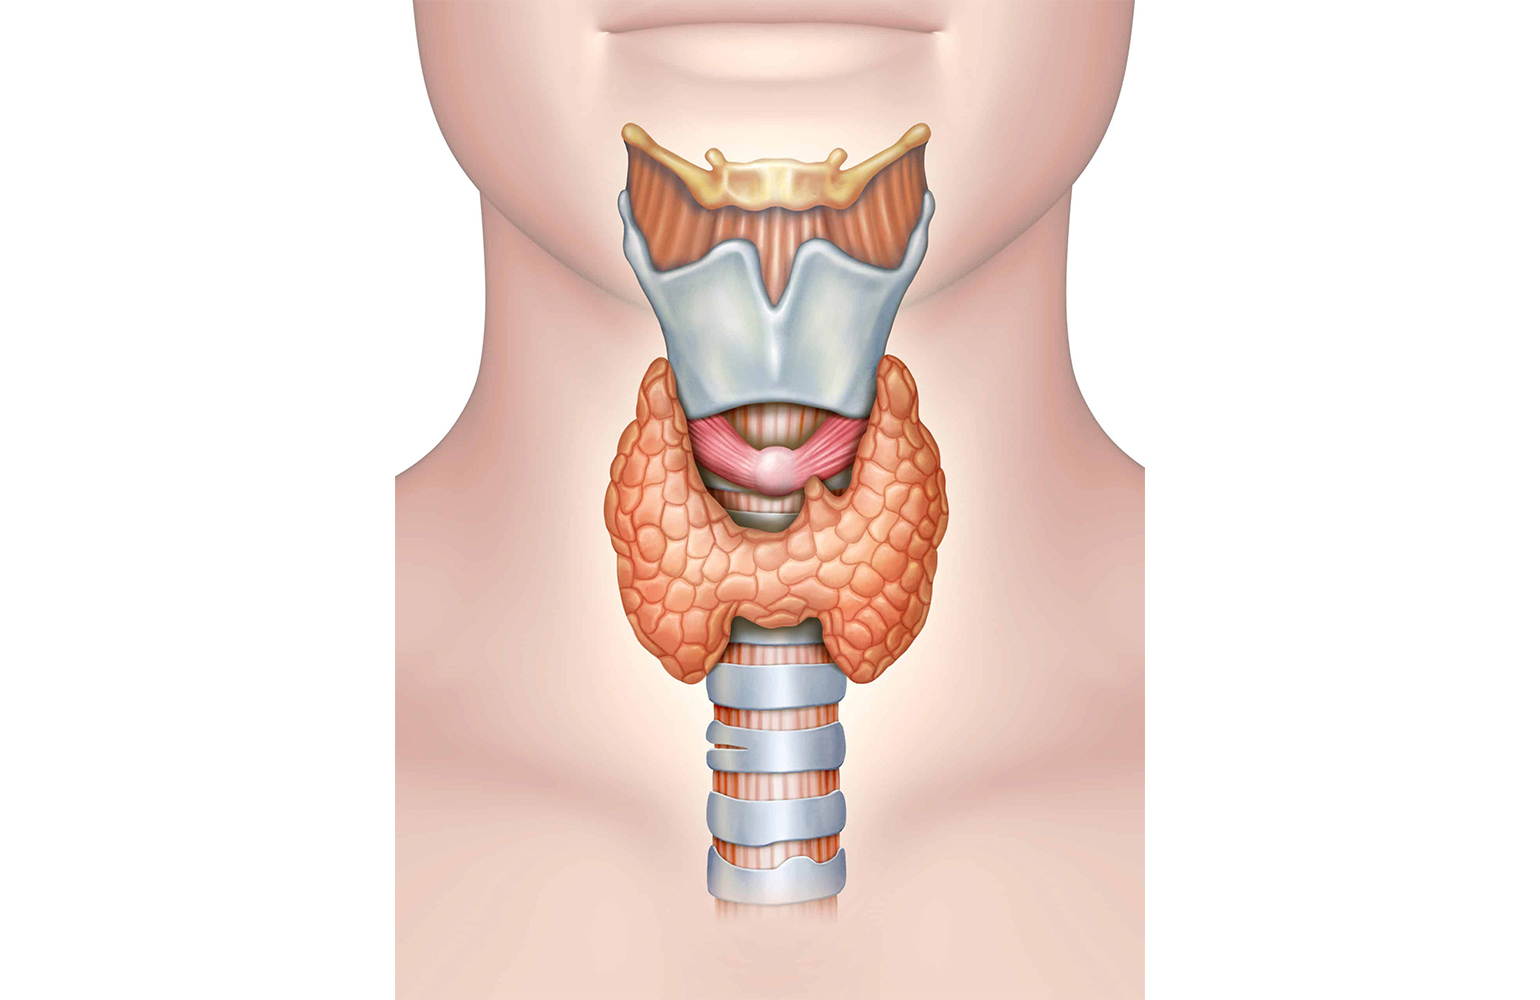 Thyroid Cancer